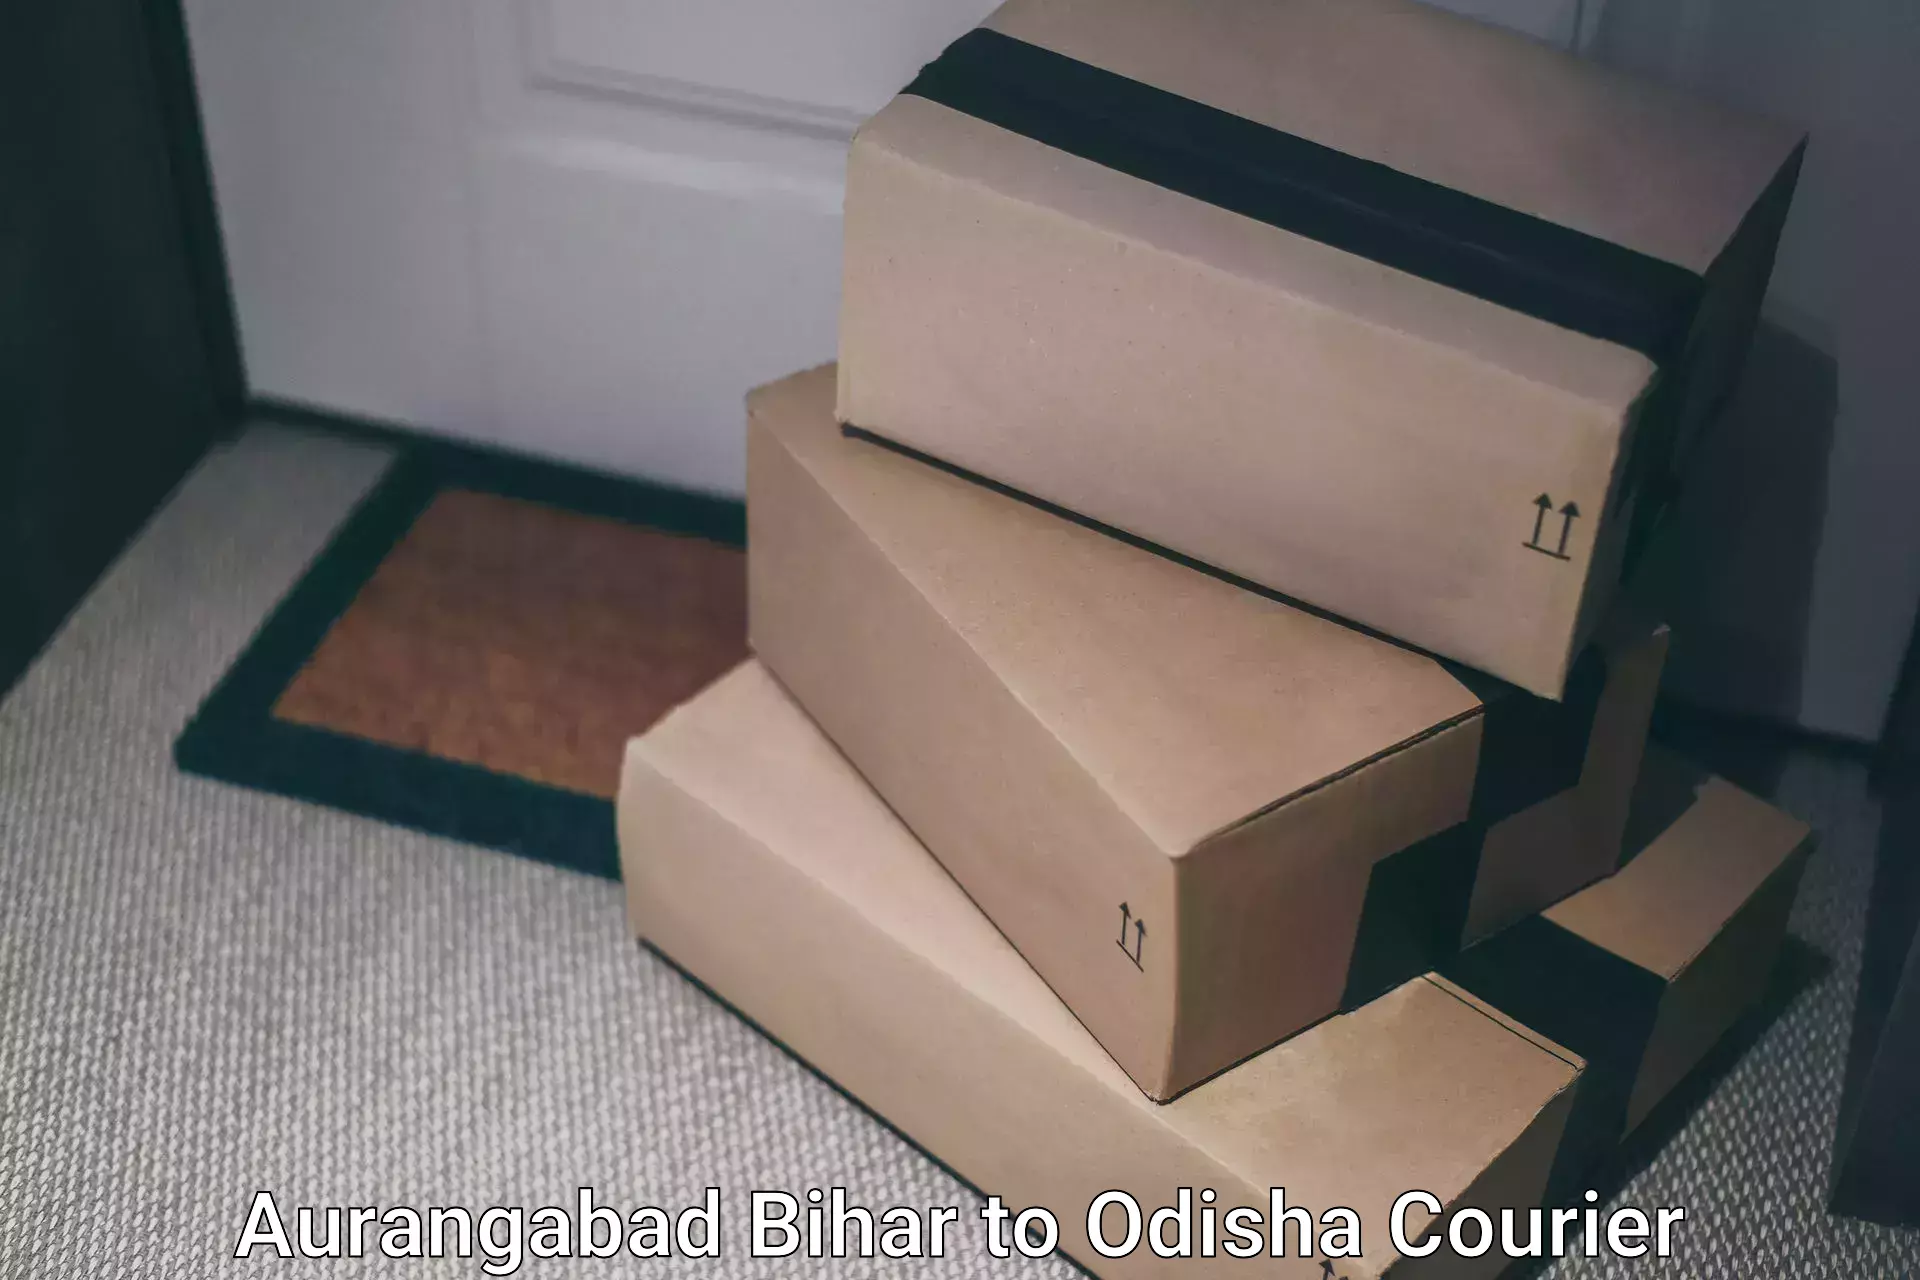 Subscription-based courier Aurangabad Bihar to Nirakarpur